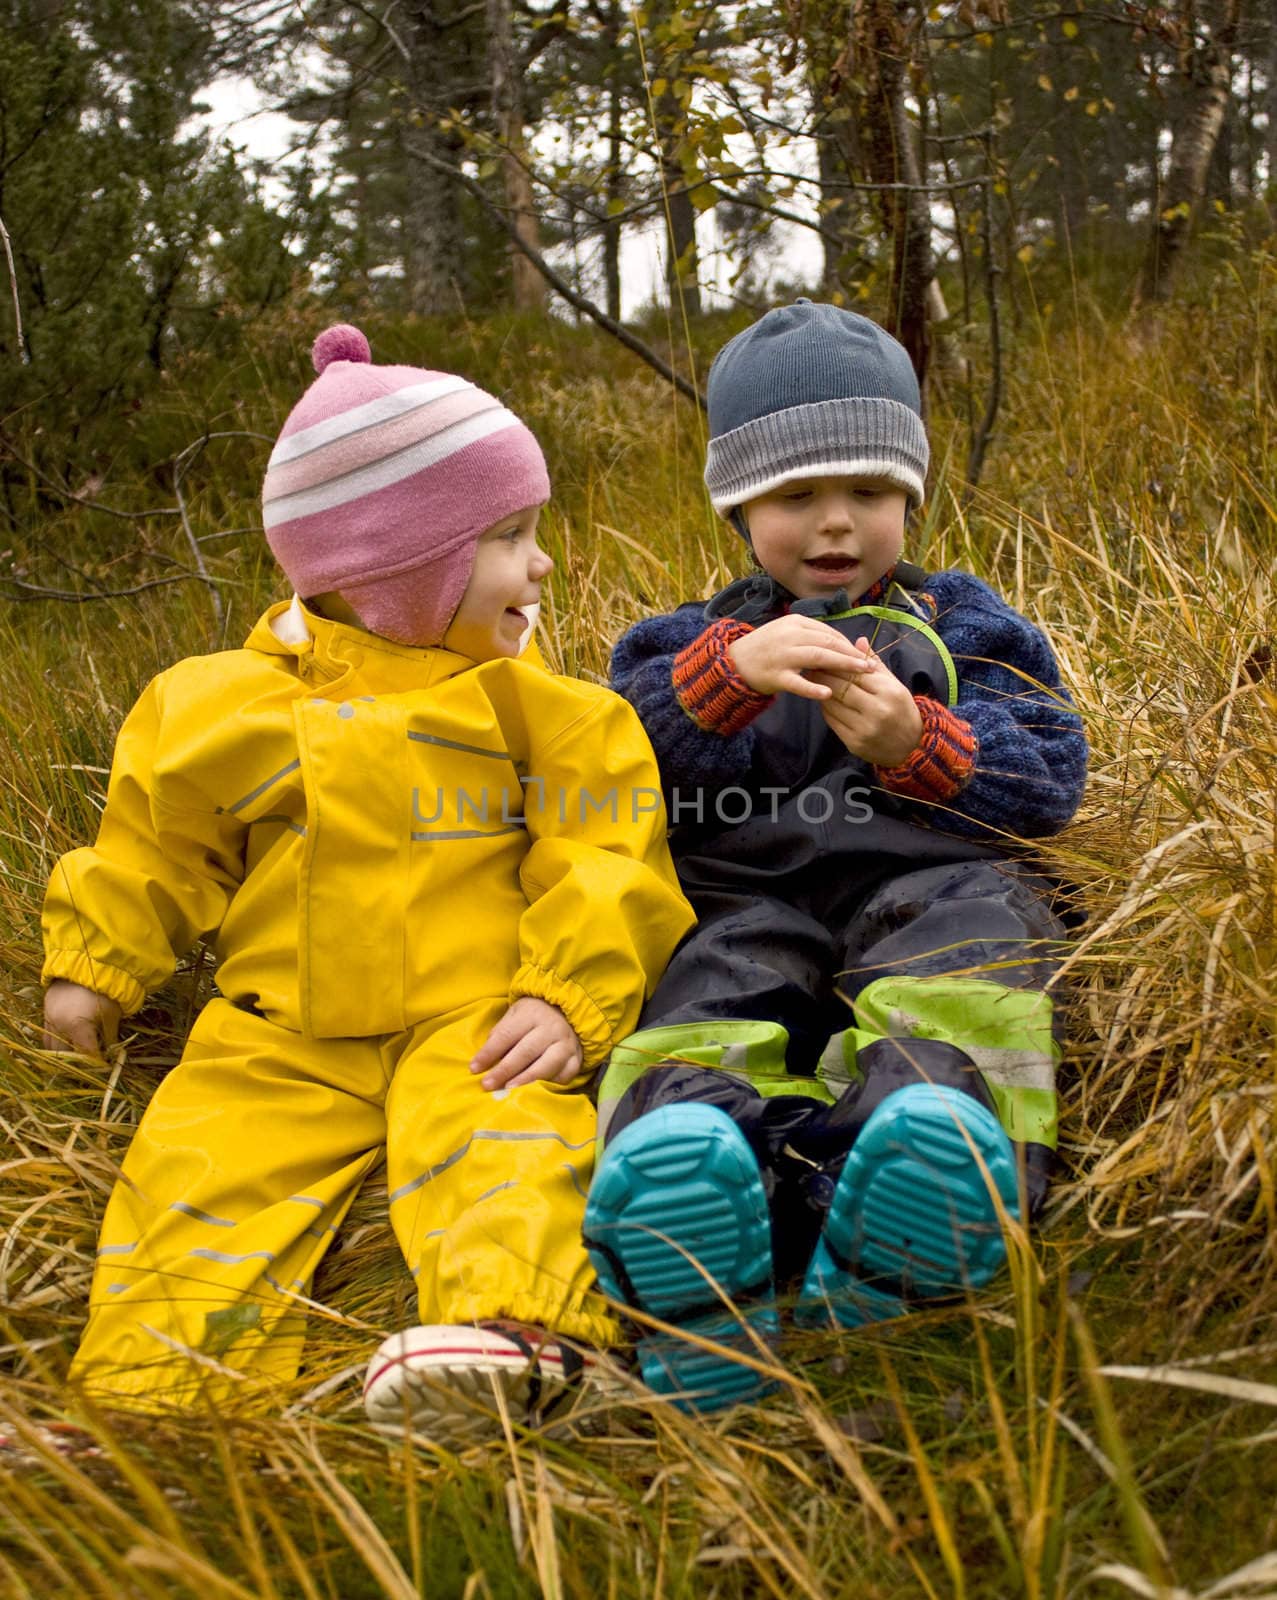 Children talking together in an autumn forest